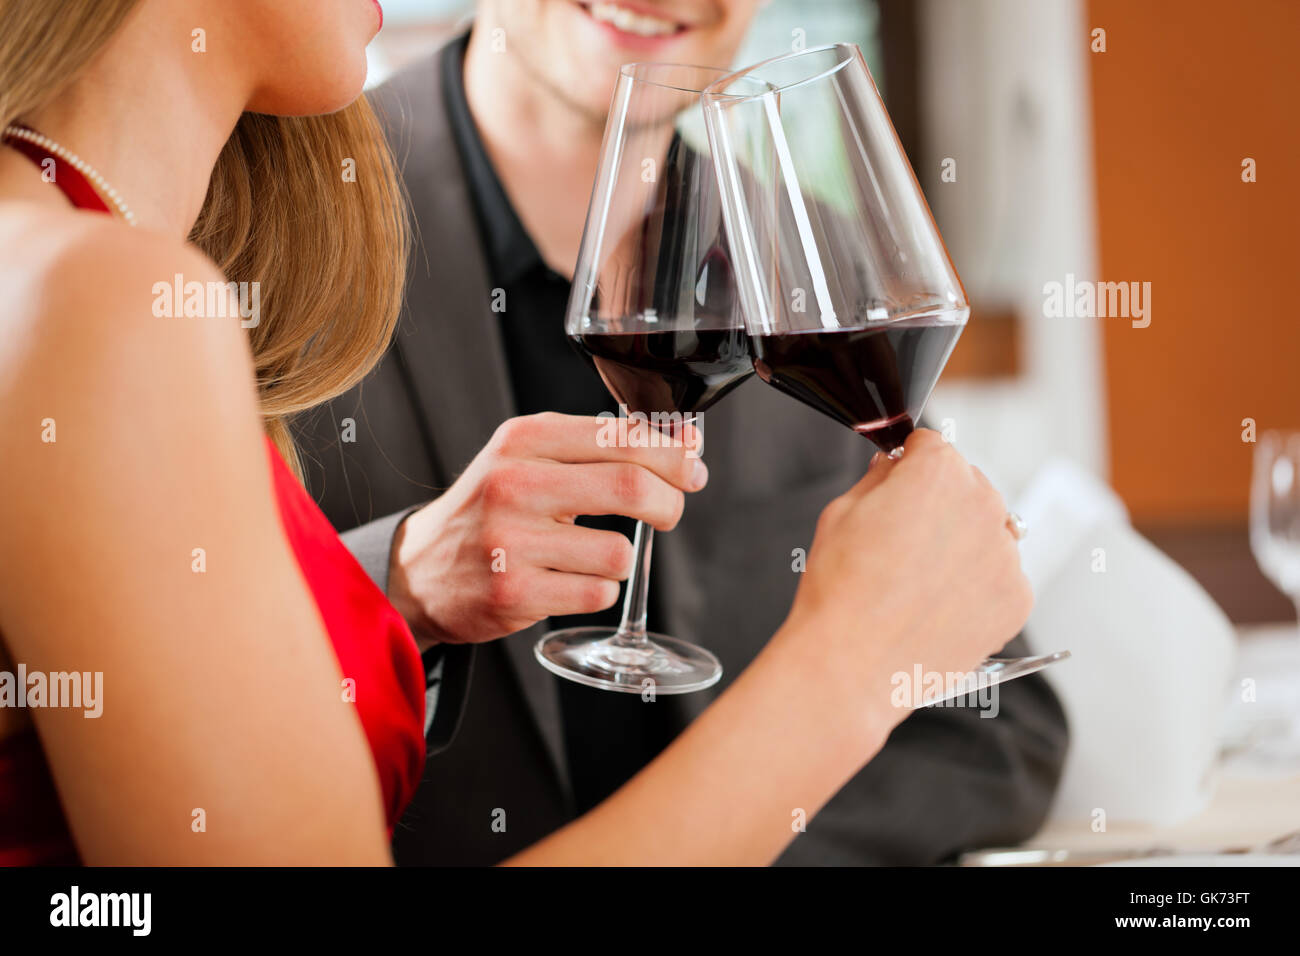 woman restaurant wine Stock Photo